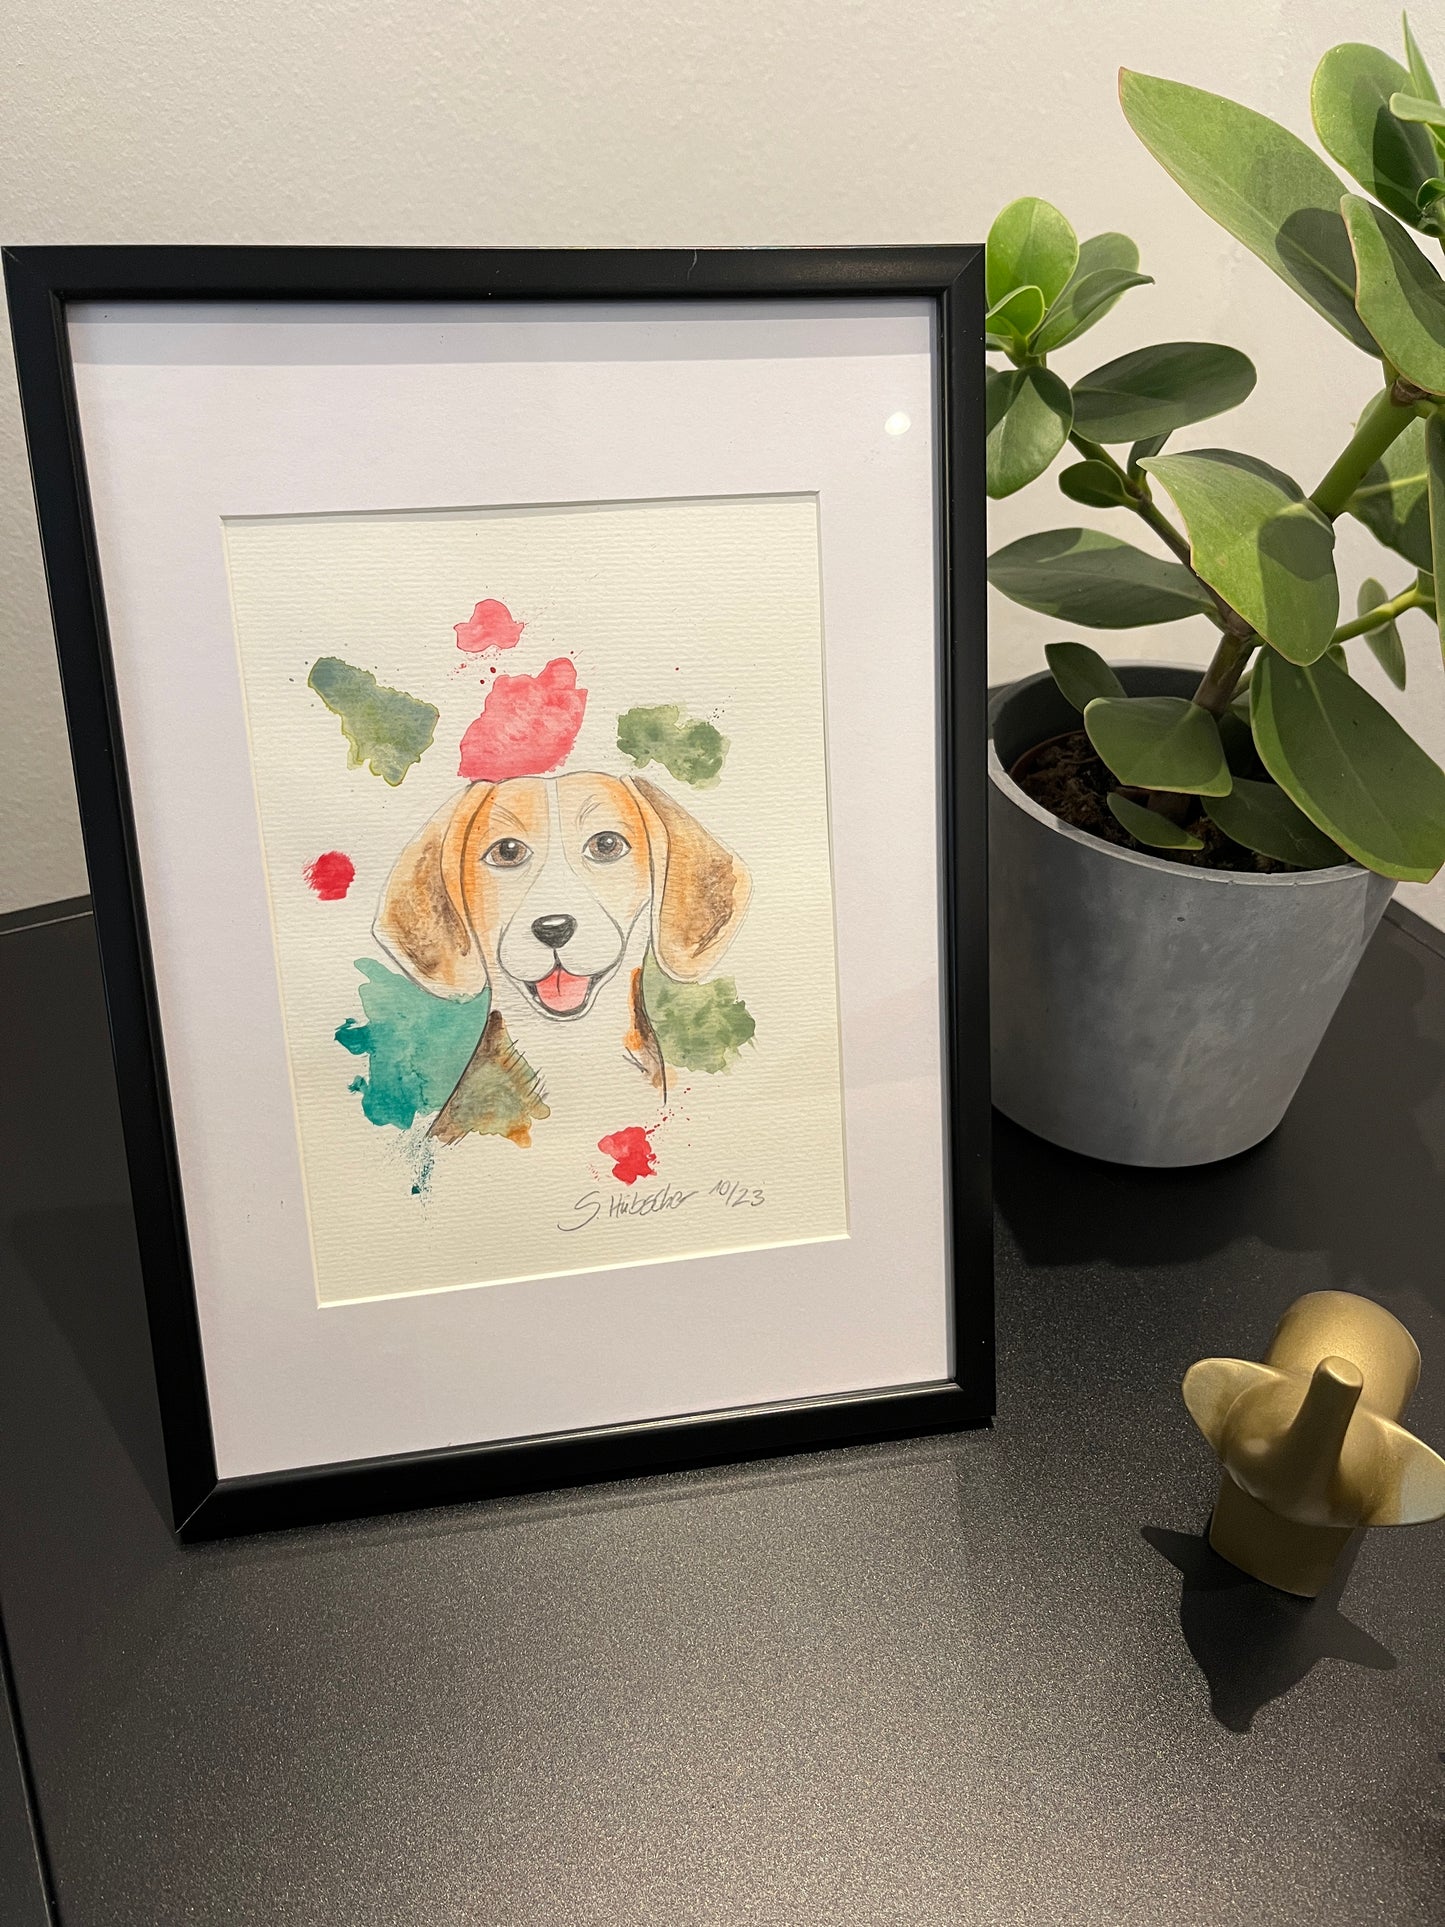 21x30cm Aquarell Porträt "Beagle im Farbrausch"